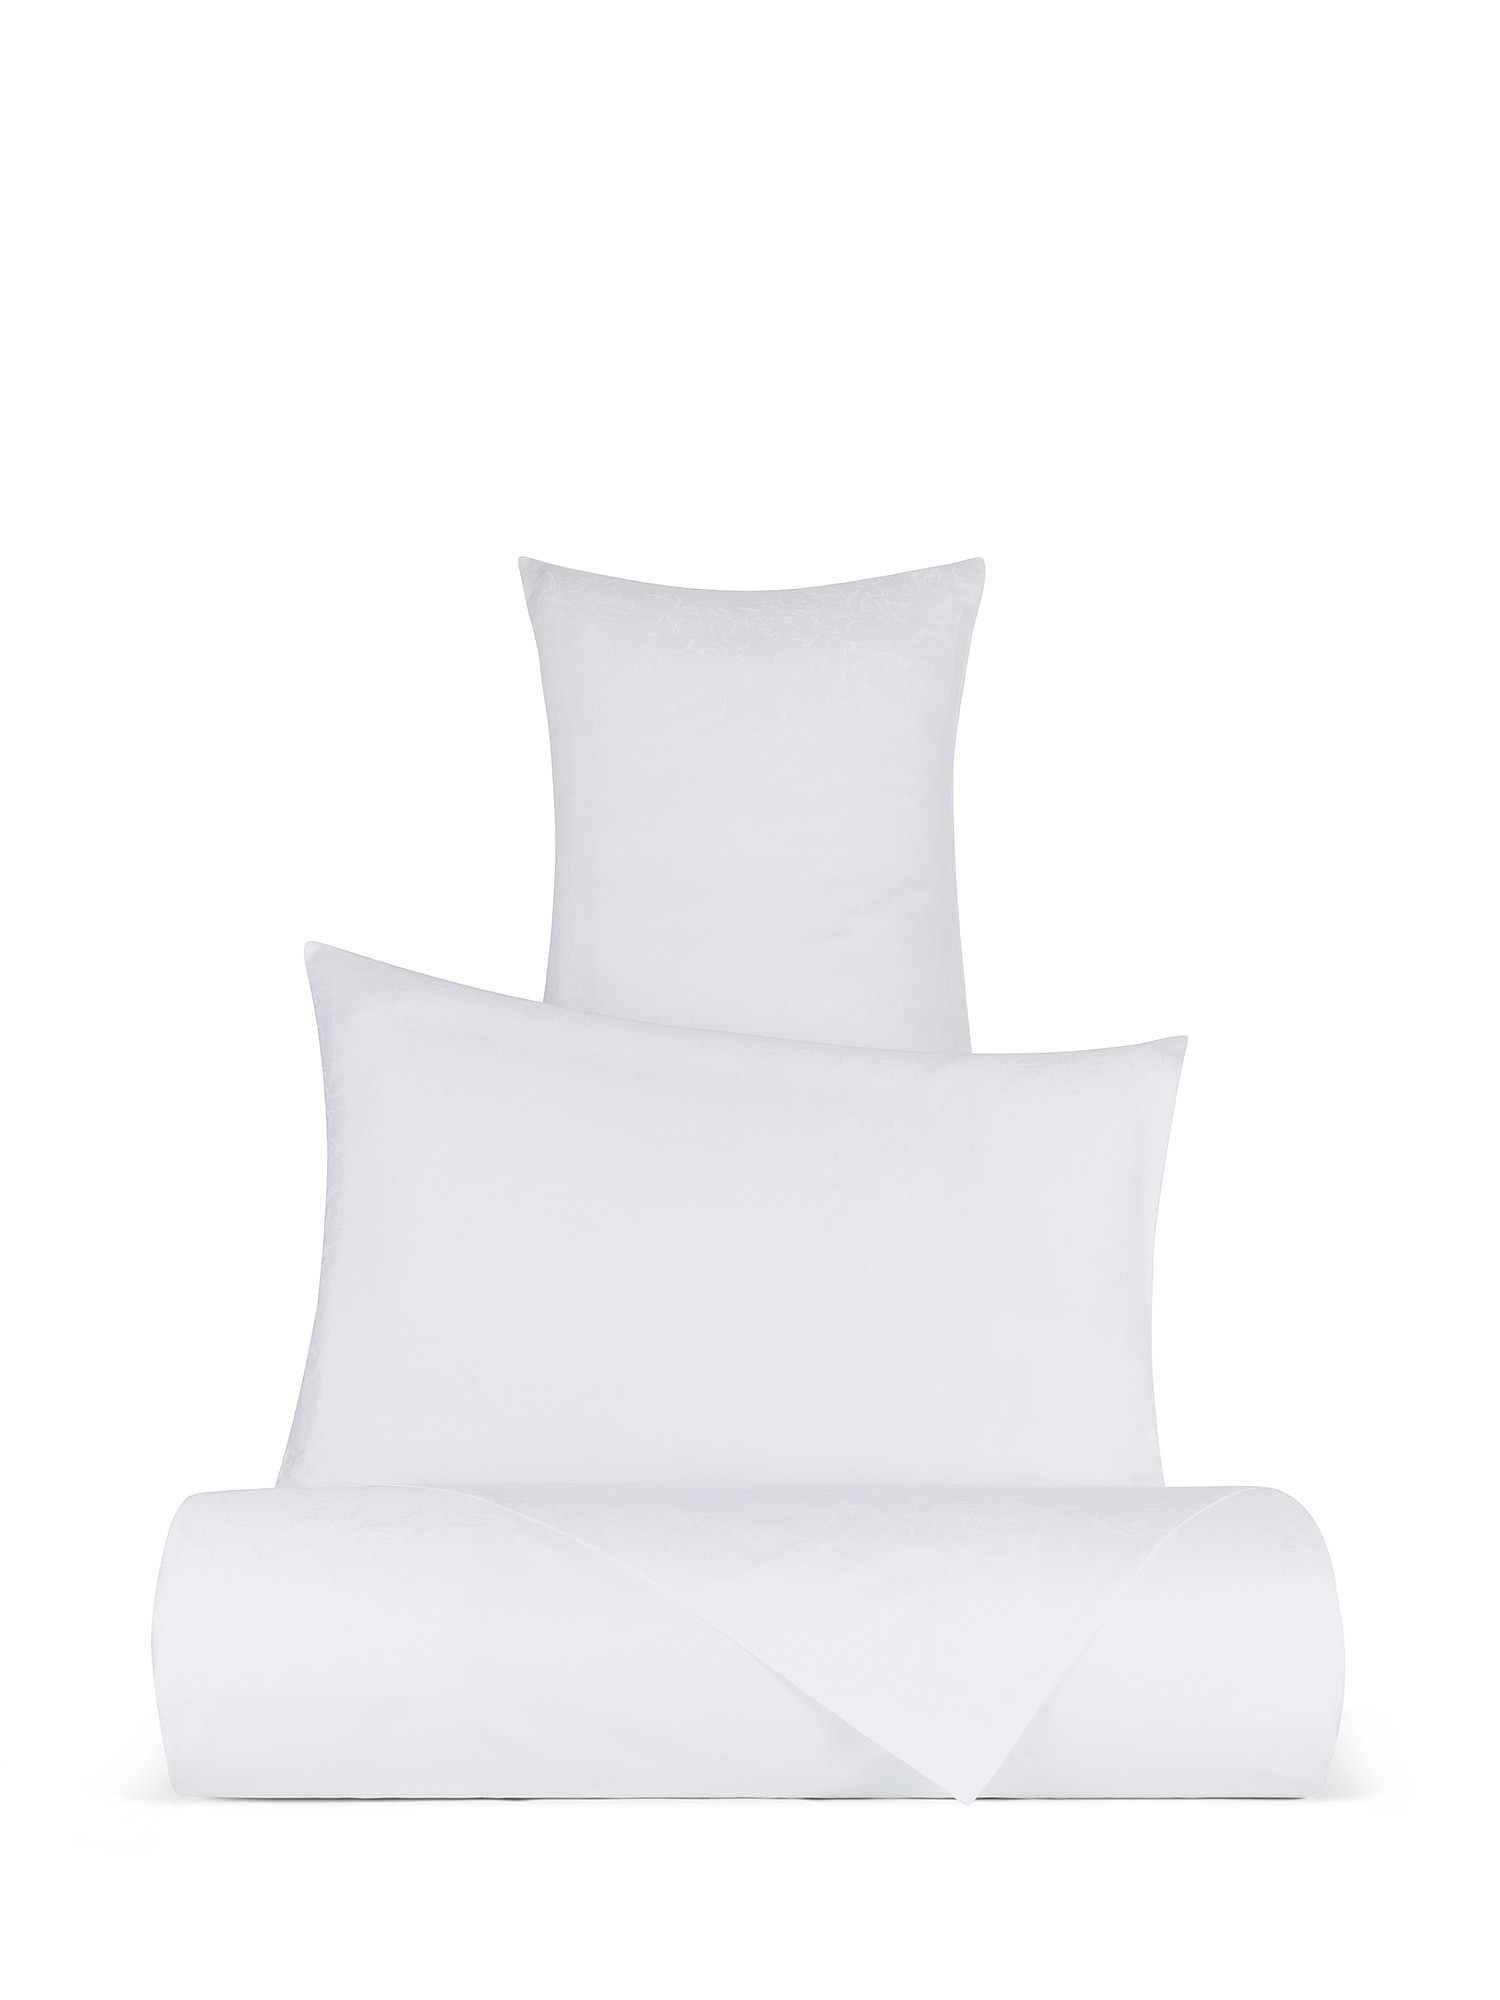 Cotton percale jacquard pillowcase Portofino, White, large image number 3